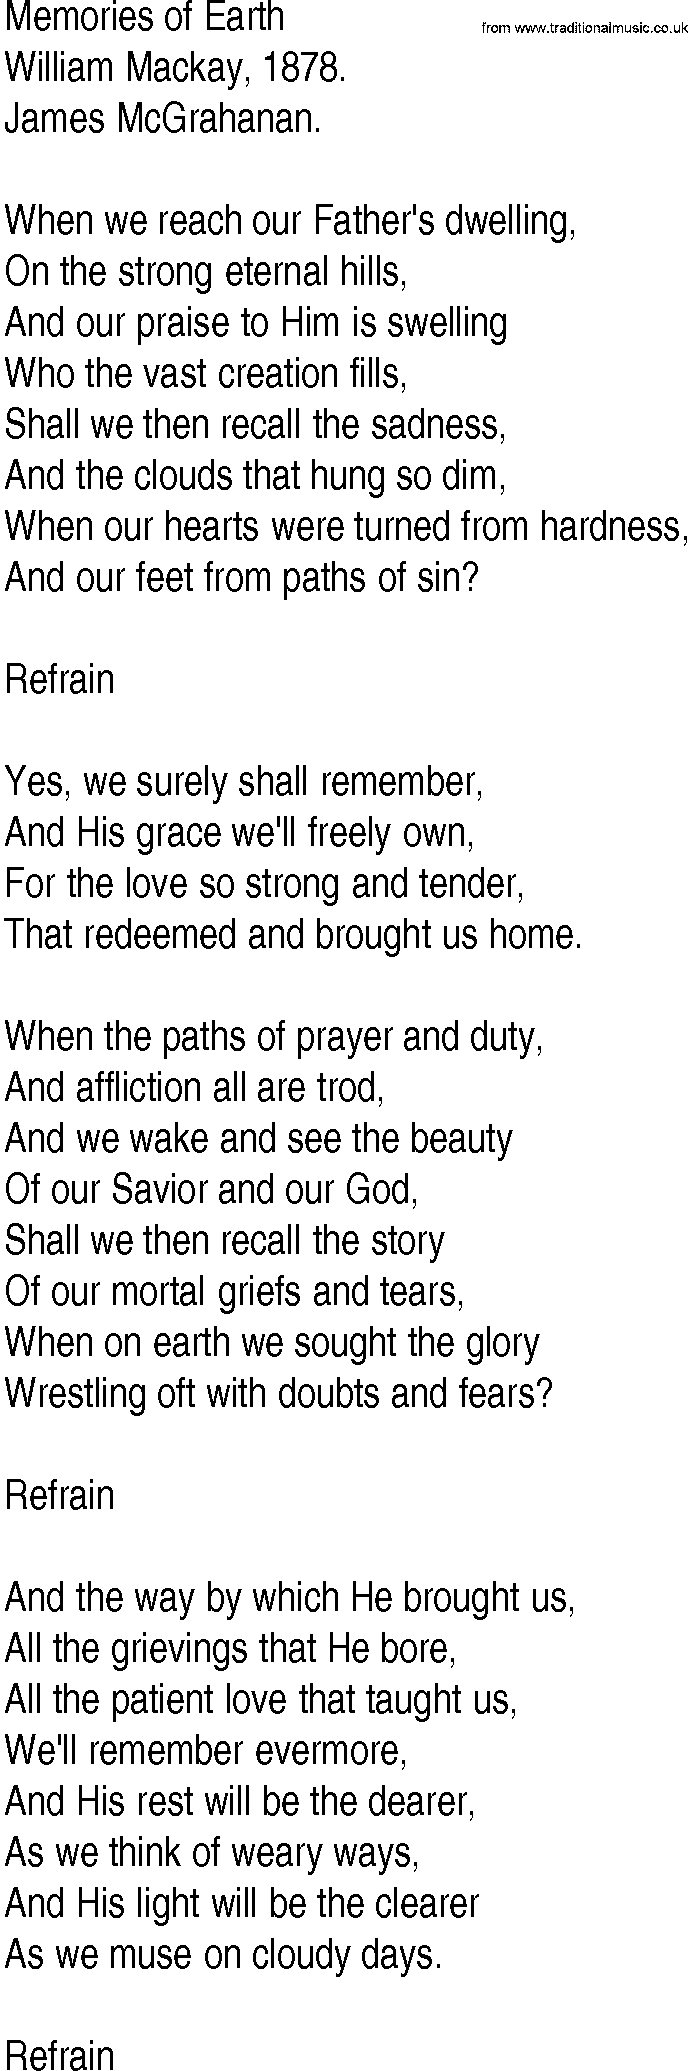 Hymn and Gospel Song: Memories of Earth by William Mackay lyrics